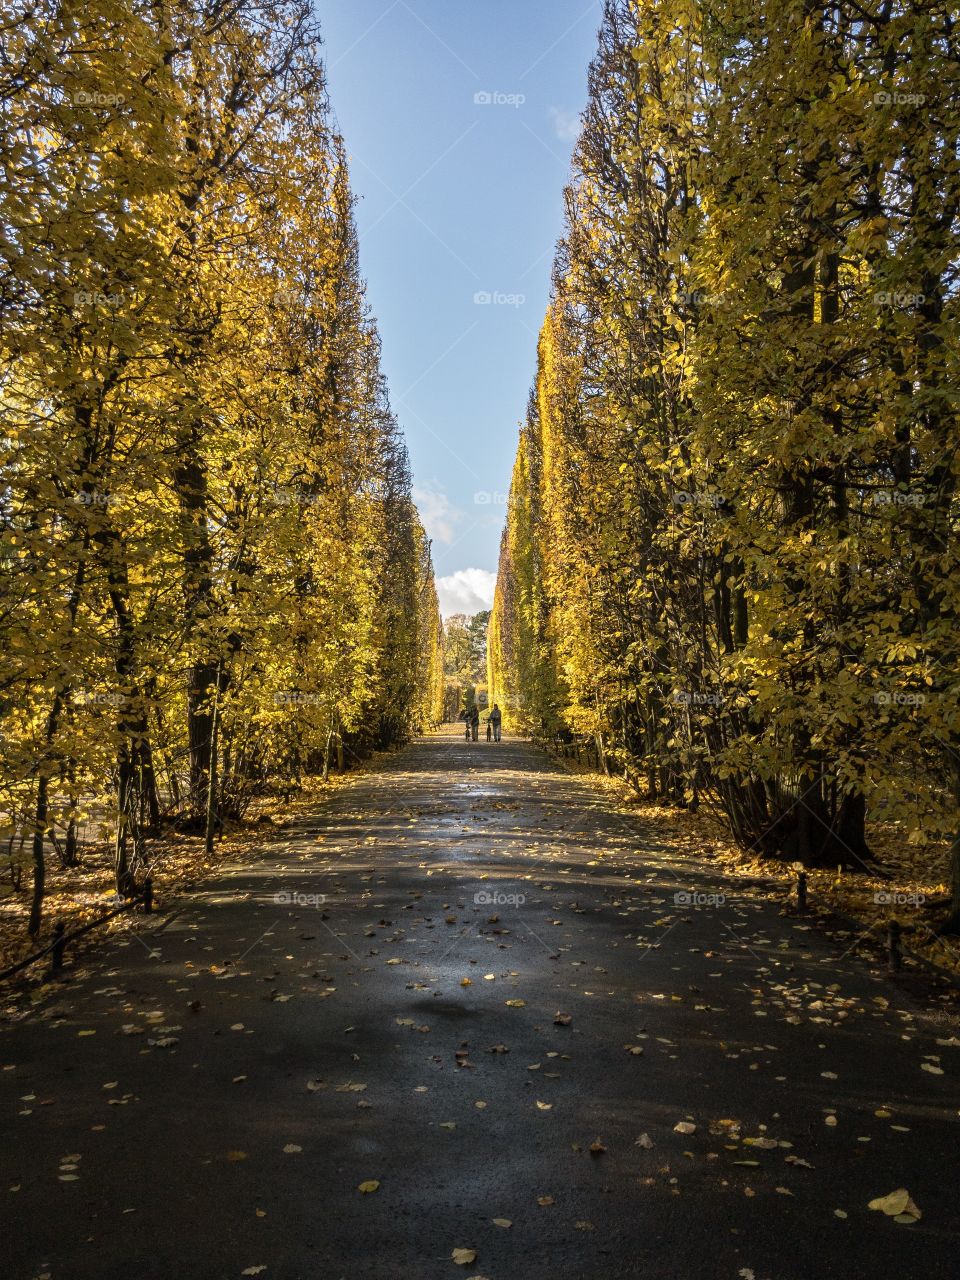 Road passing through autumn trees in the park